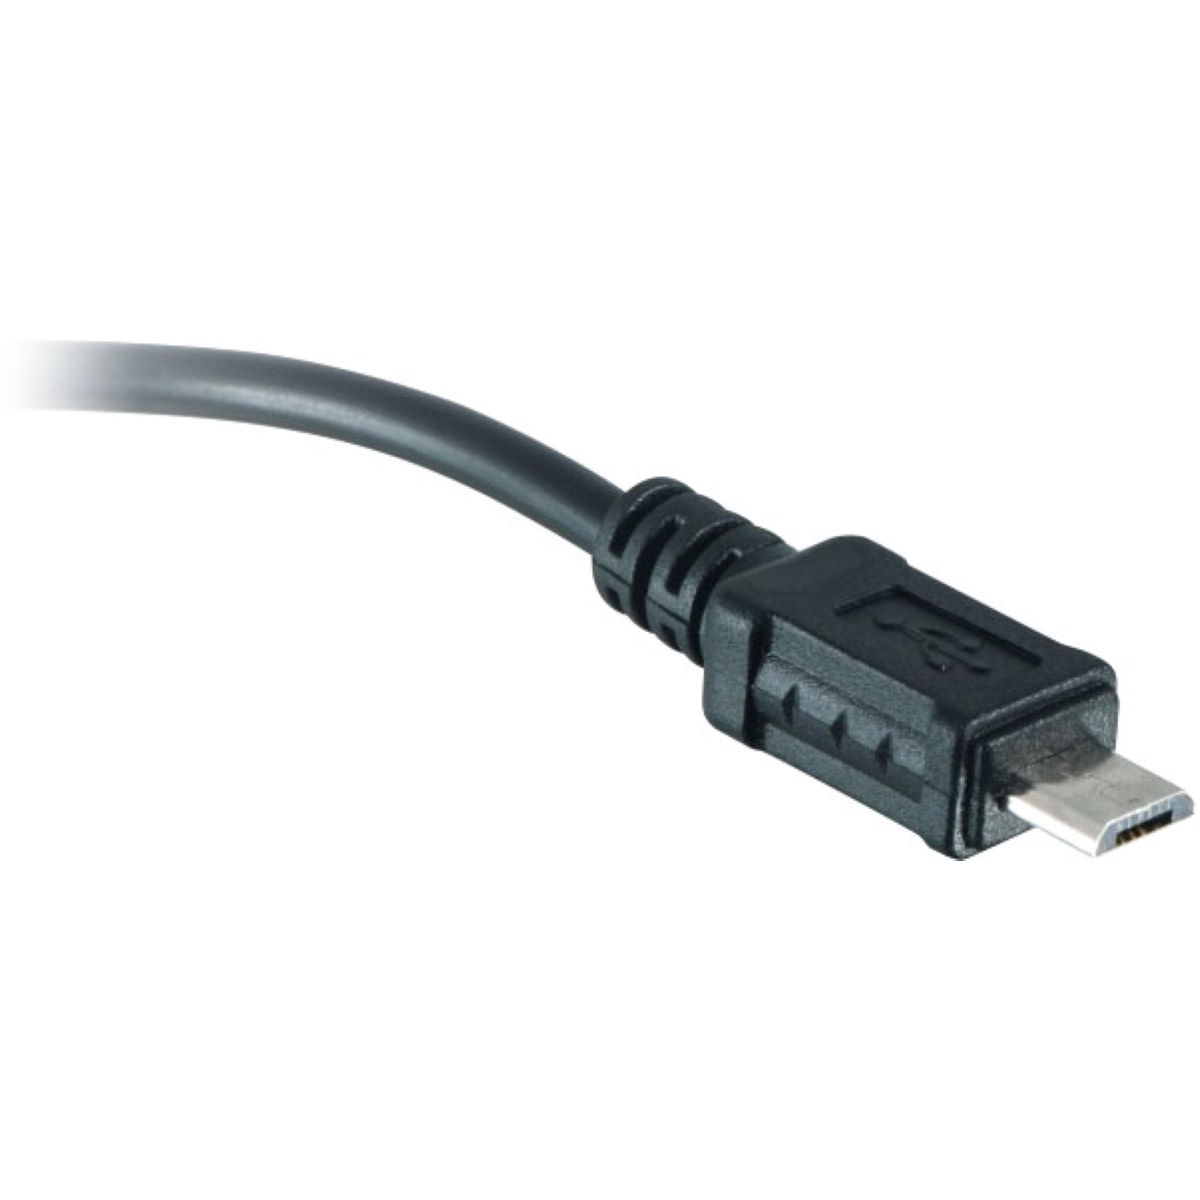 Sigma USB Charging Cable - Cargadores